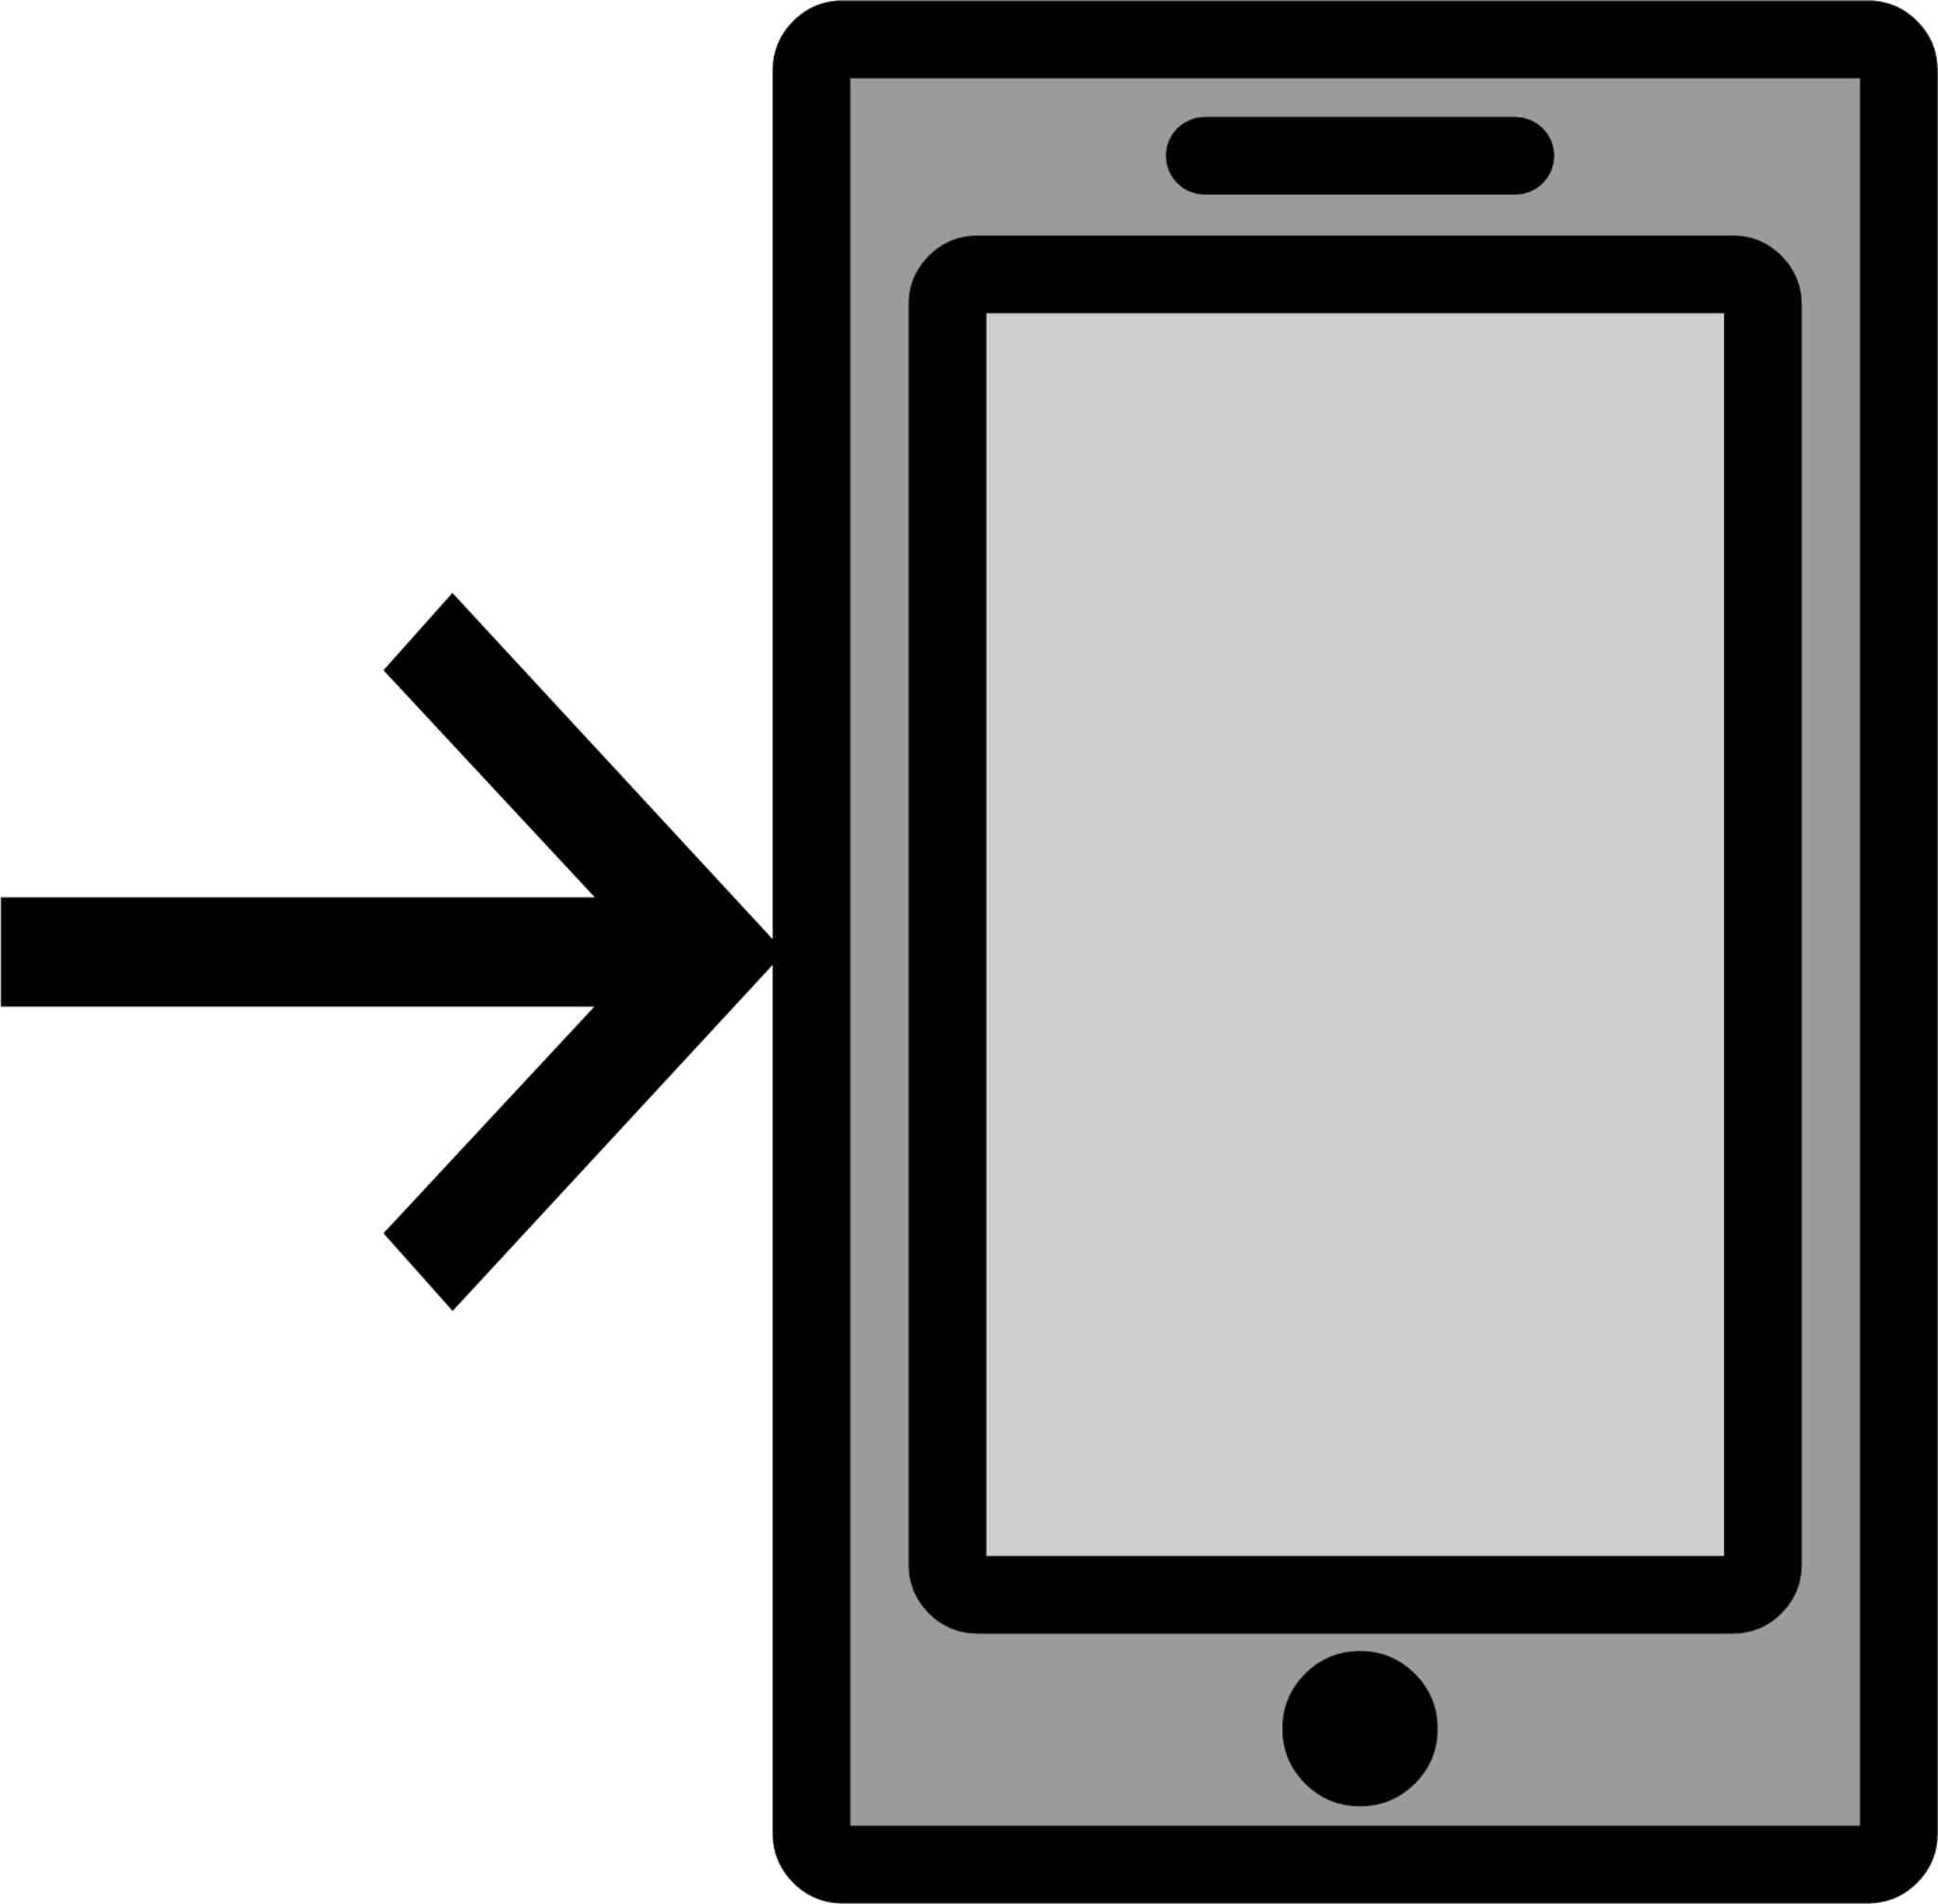 mobile phone with arrow emoji